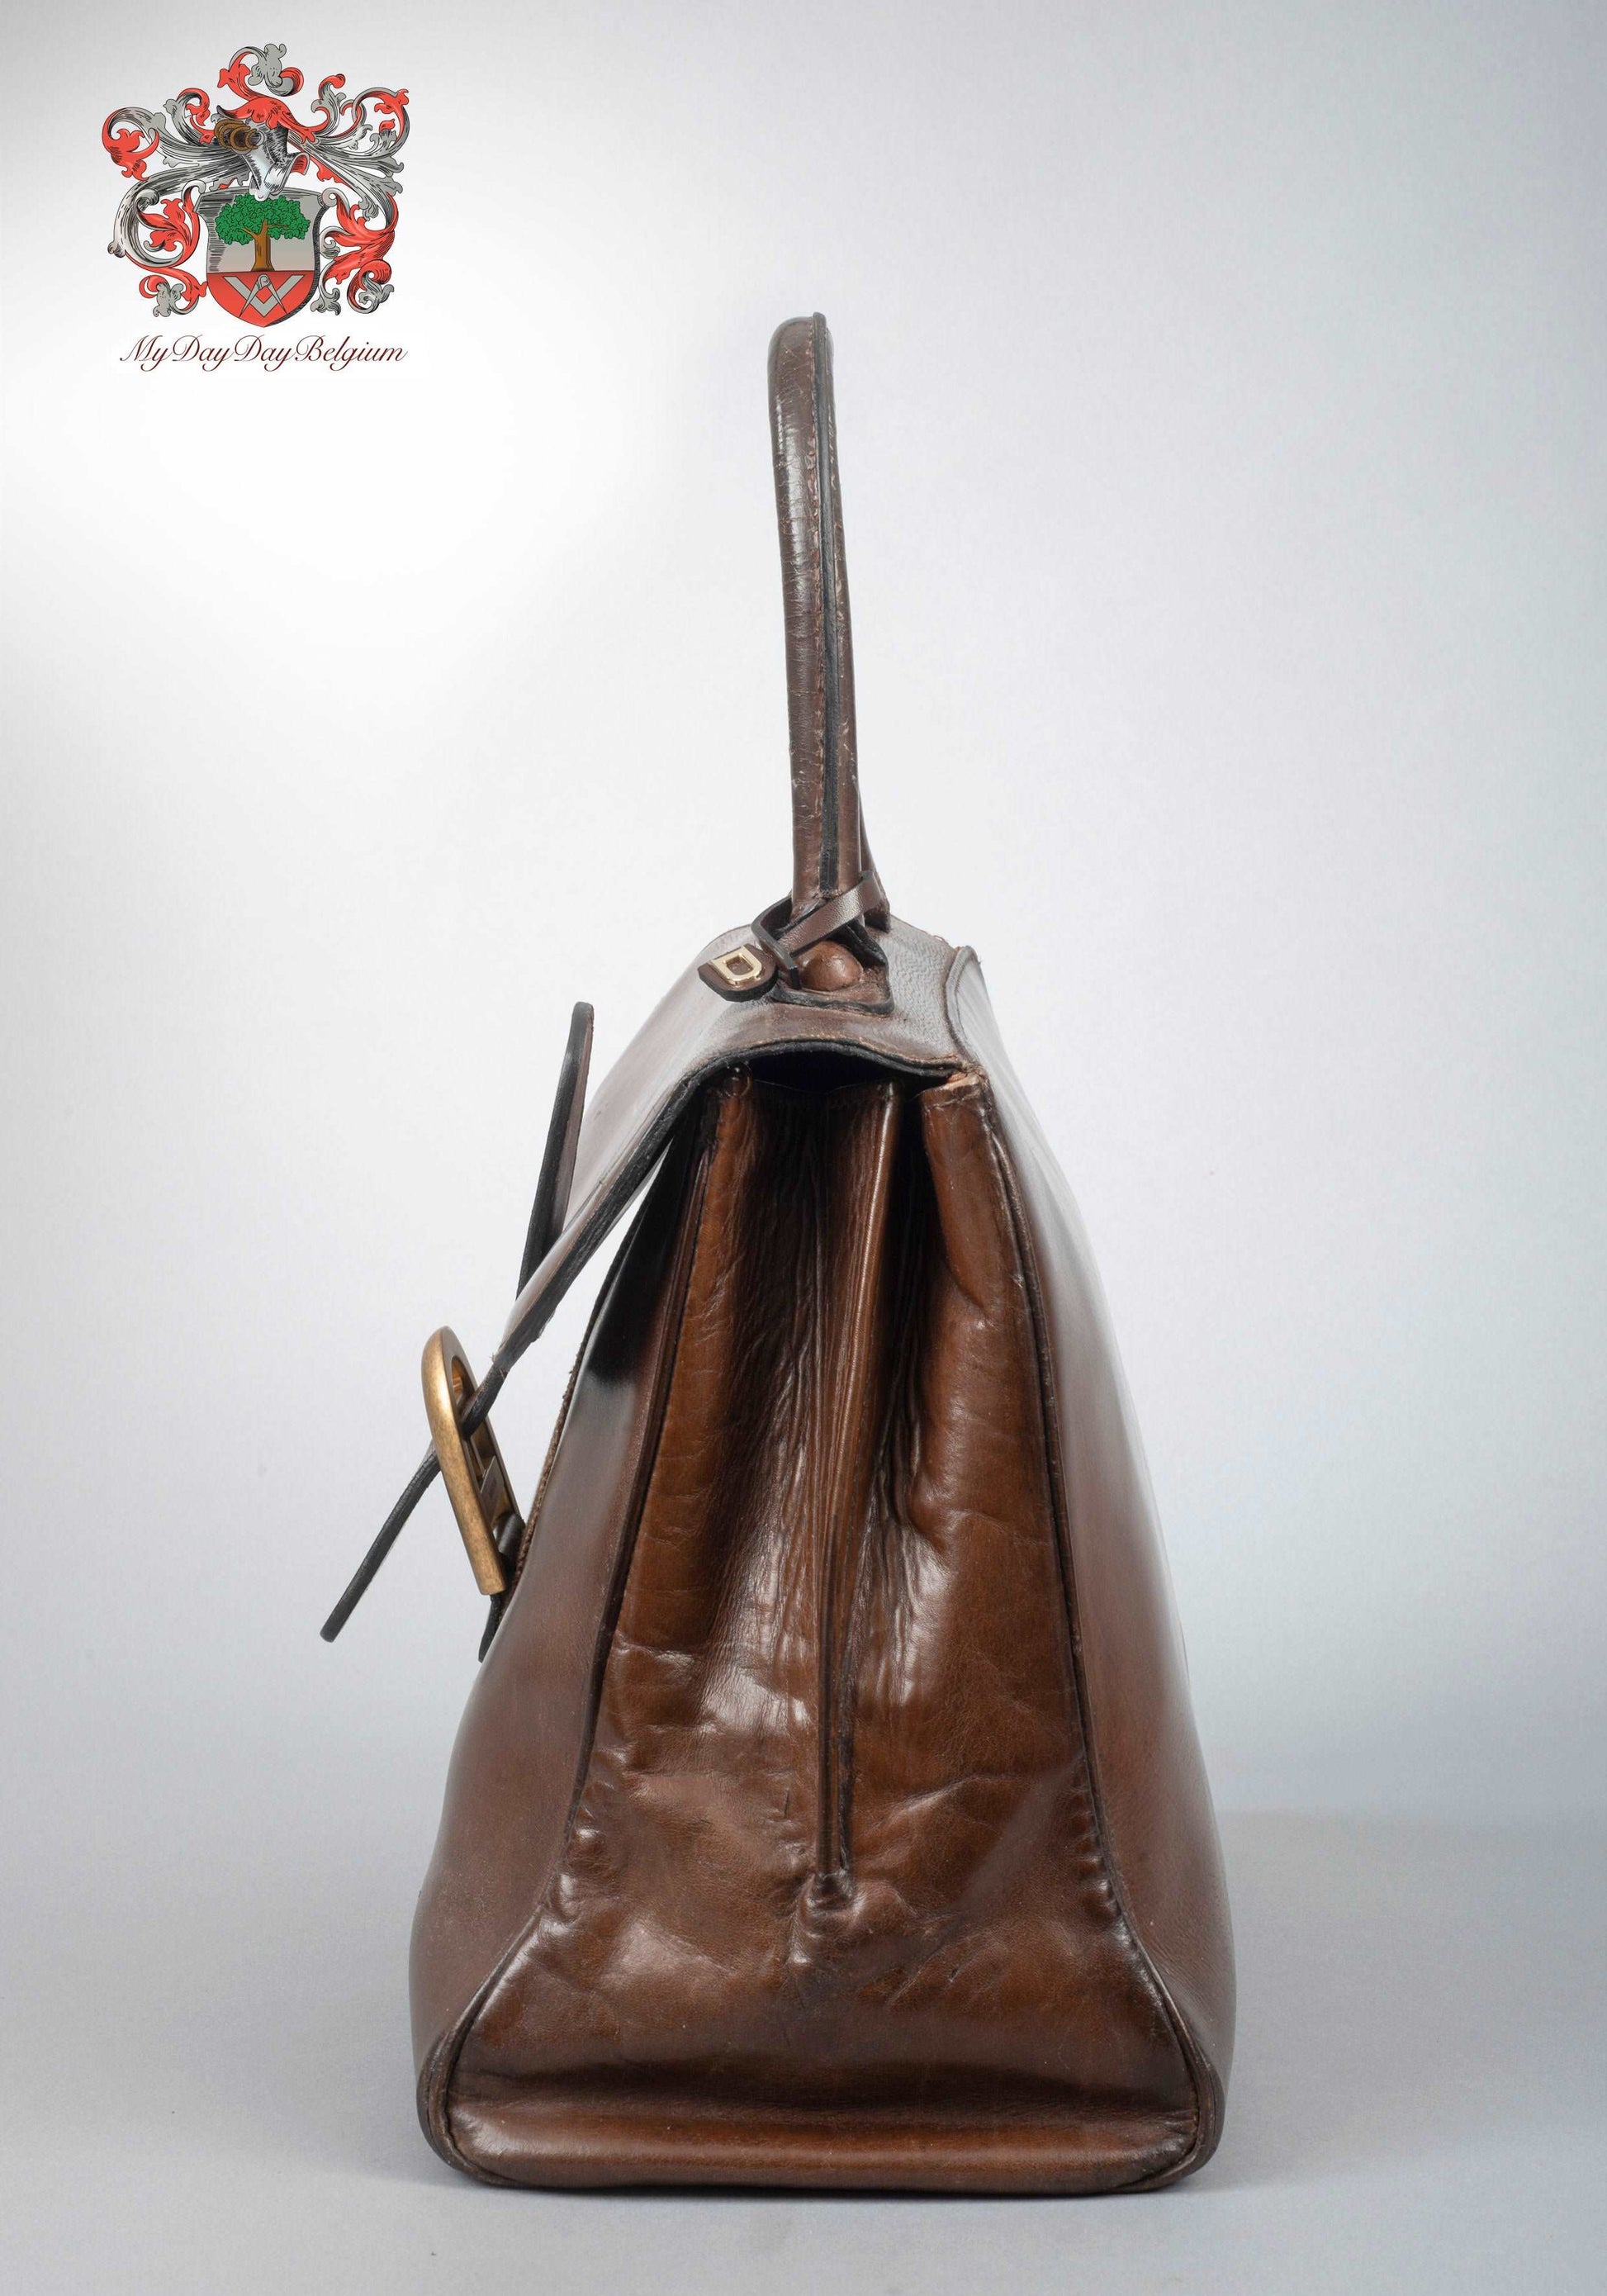 Delvaux Brillant Leather Handbag